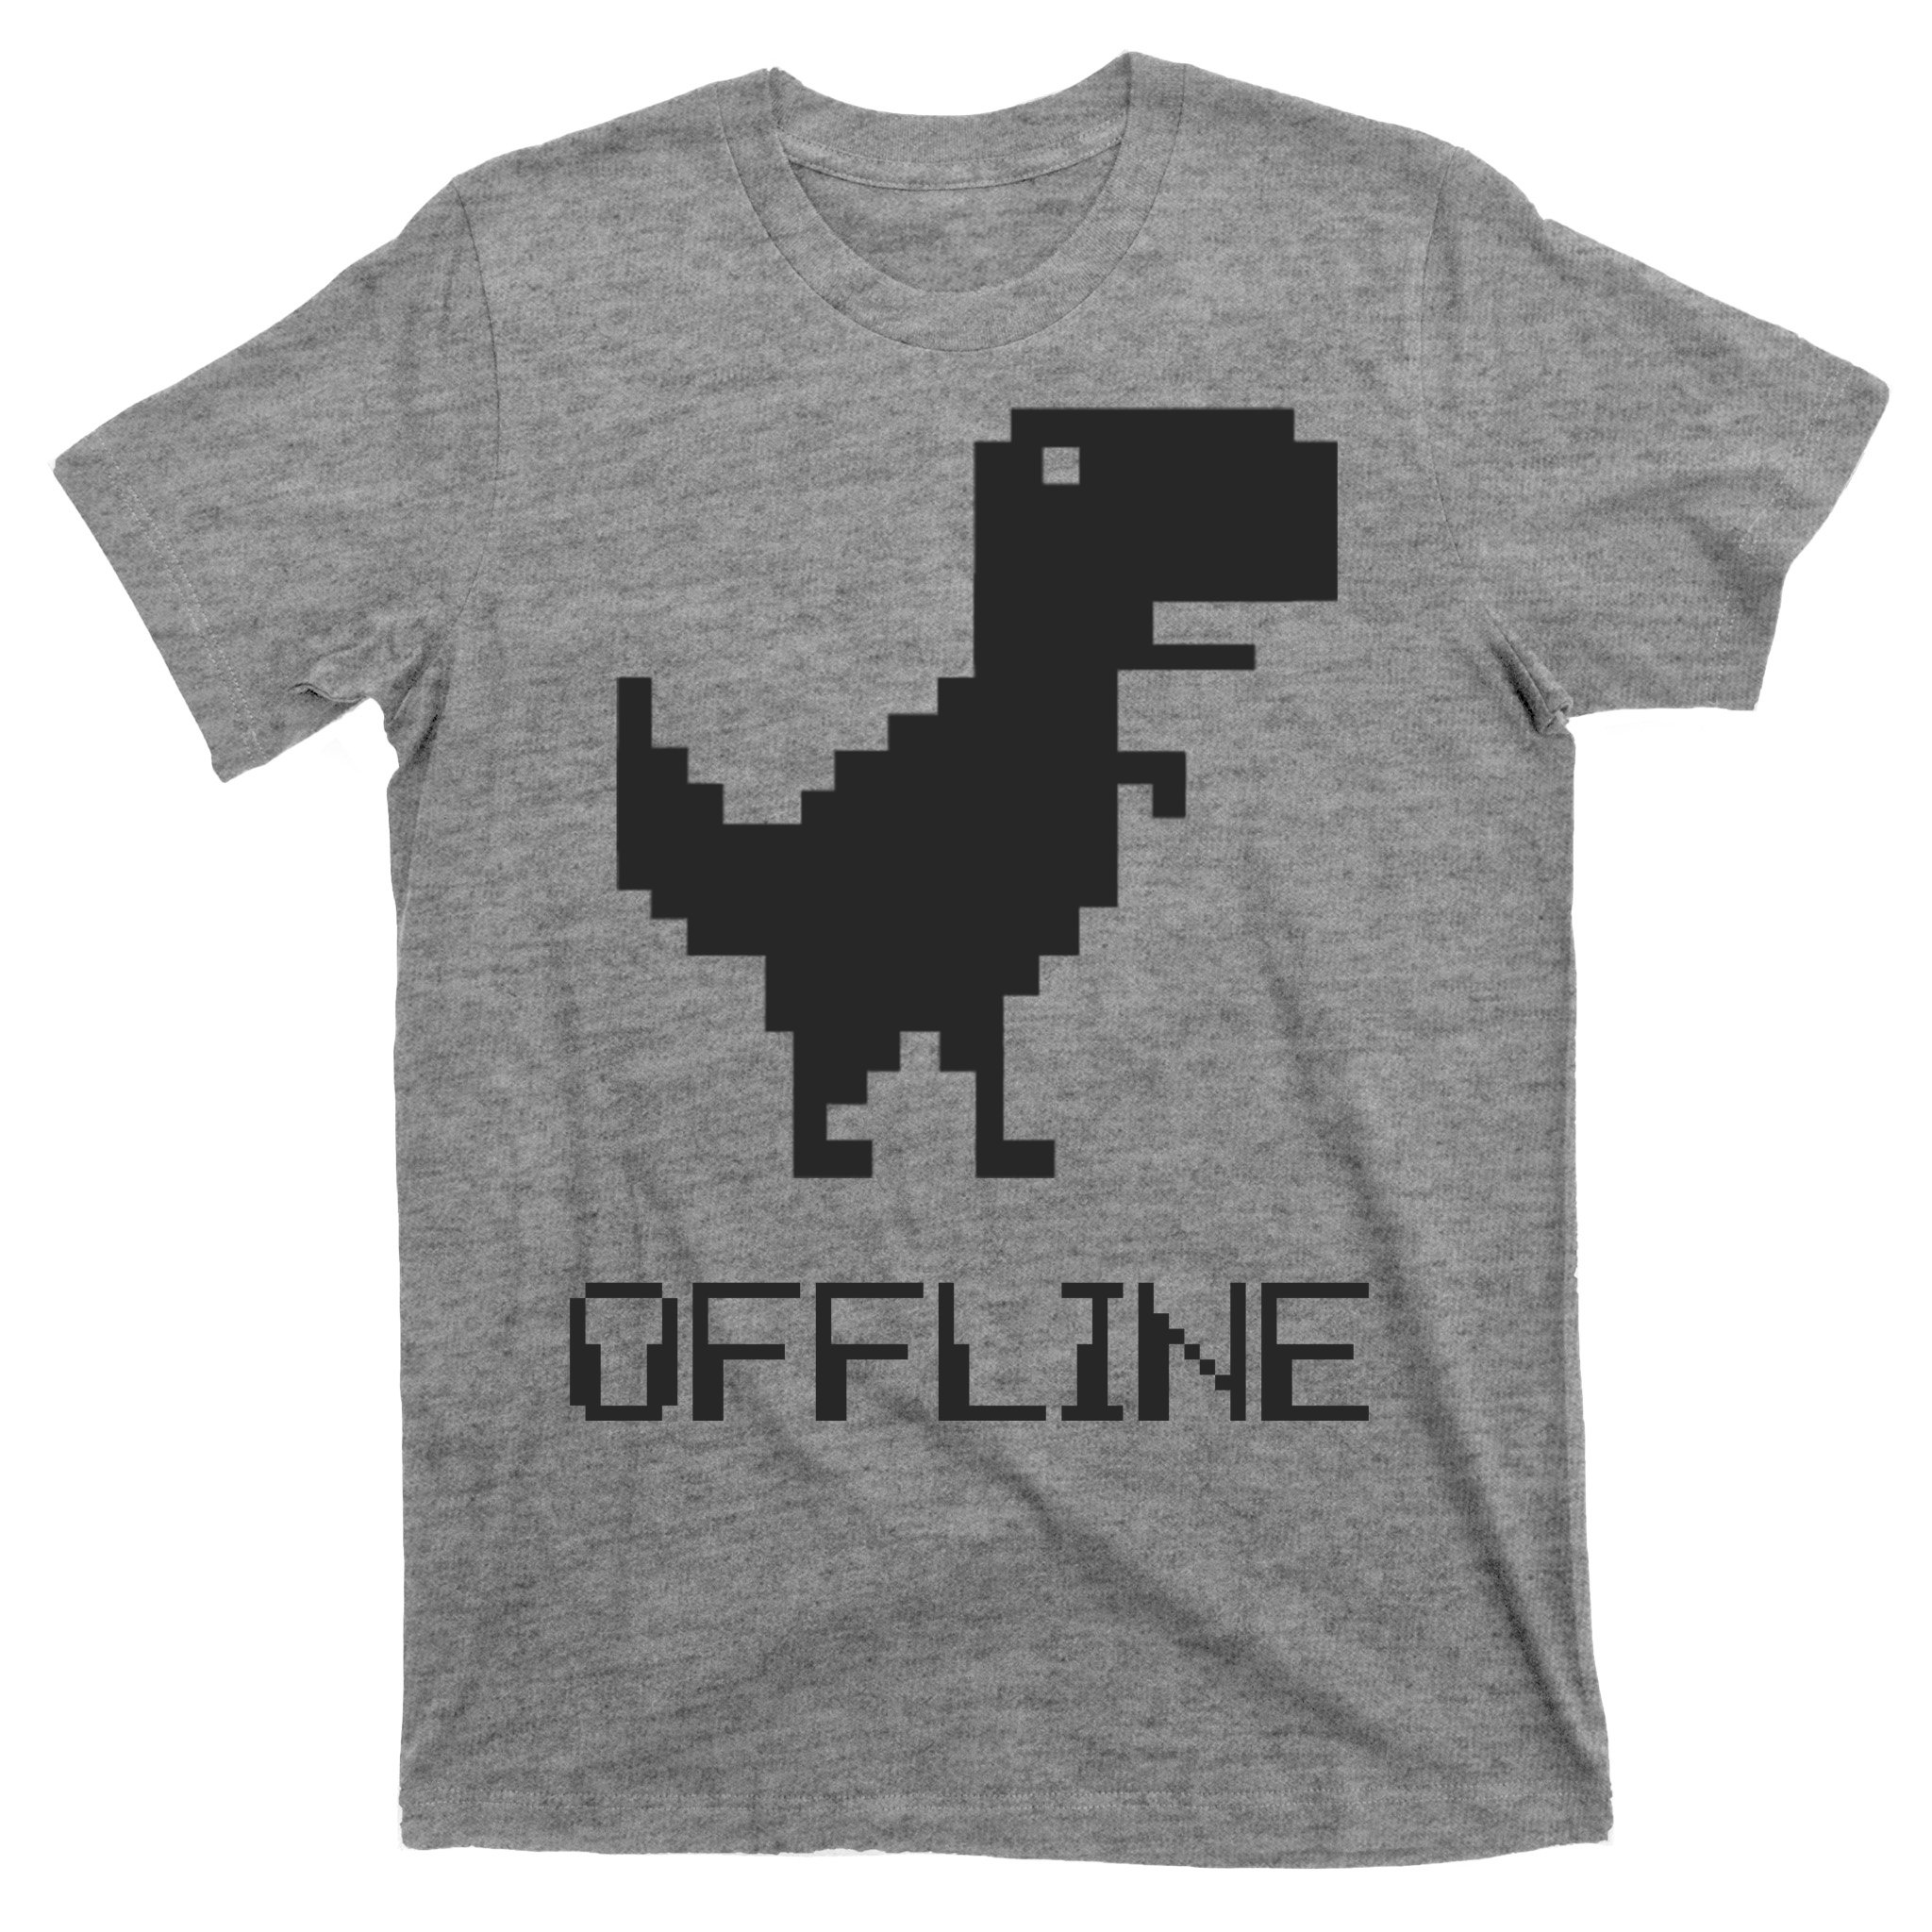 Dinosaur game offline | Poster